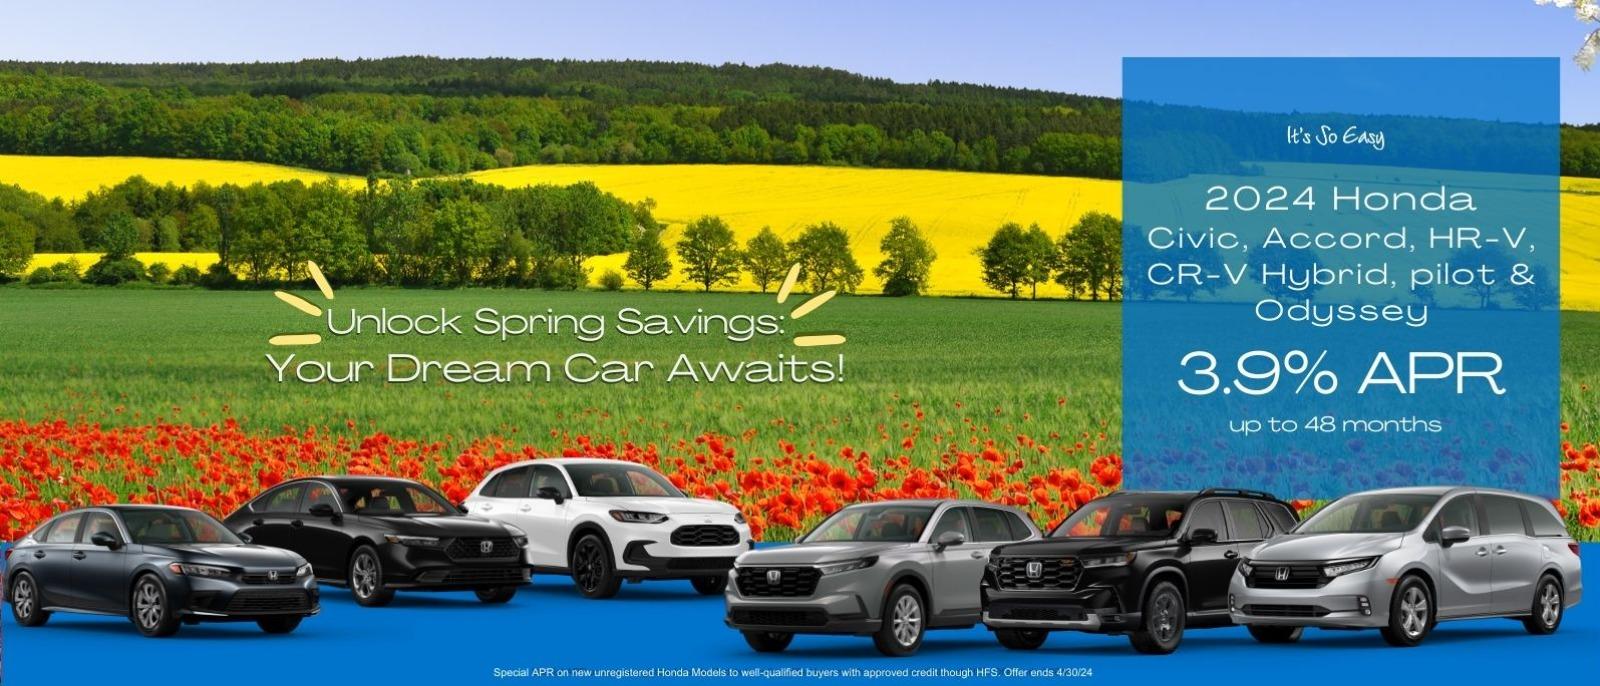 Unlock Spring Savings
Your Dream Car Awaits!

2024 Honda Civic, Accord, HR-V, CR-V, Hybrid, Pilot and Odyssey 

3.9% APR up to 48 Months